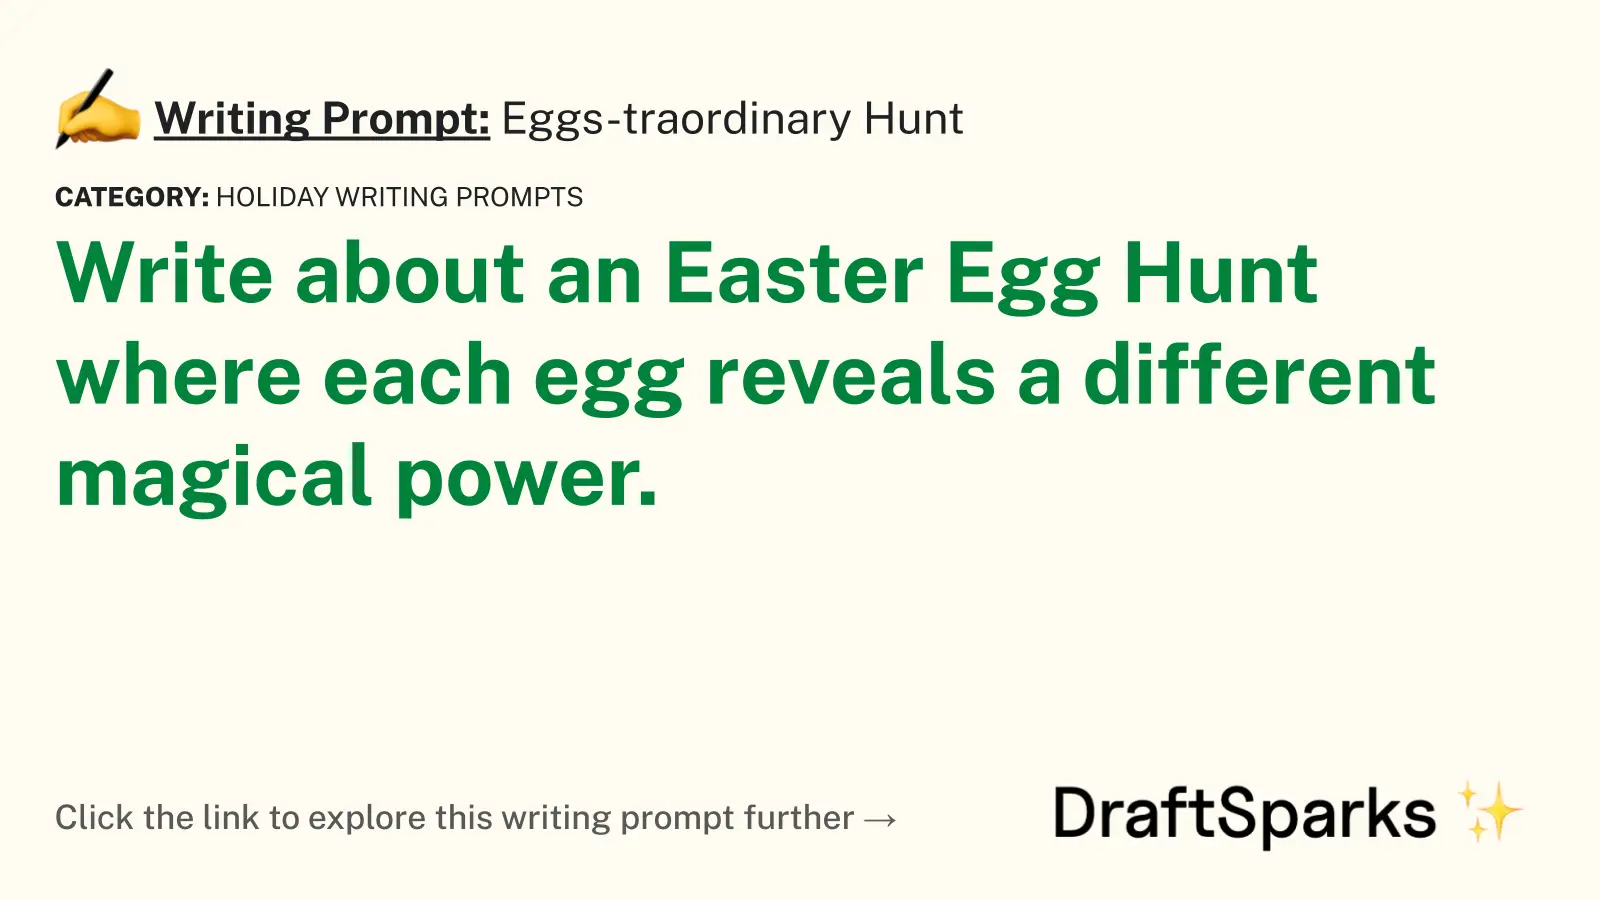 Eggs-traordinary Hunt